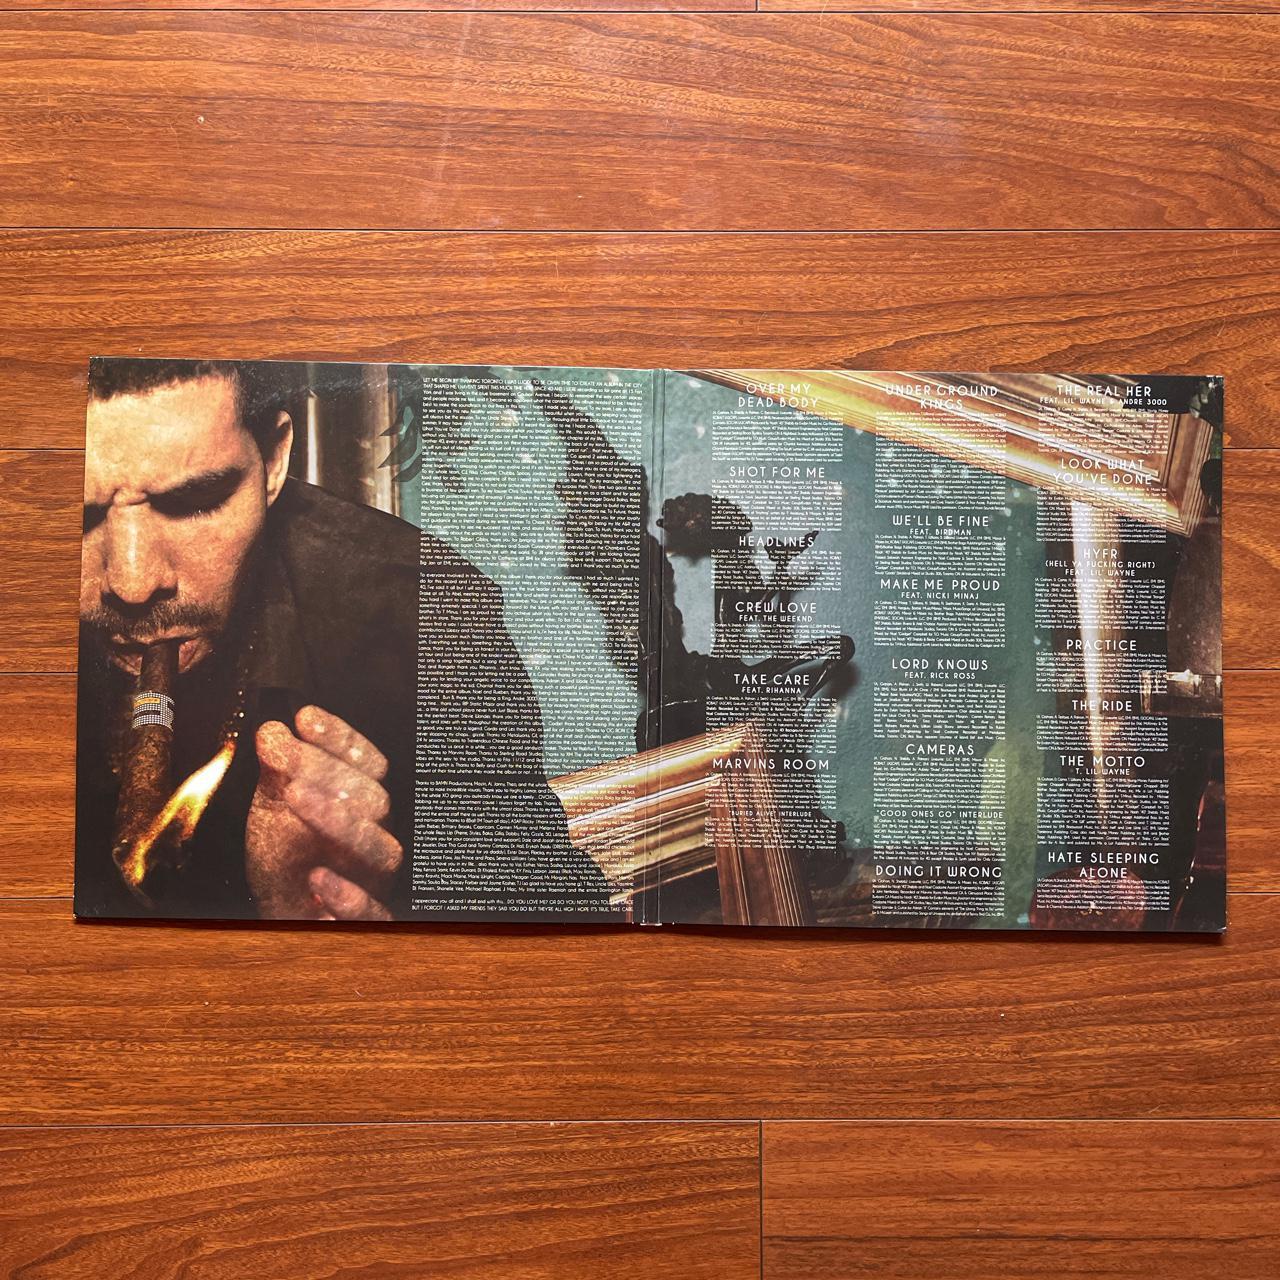 Product Image 3 - Drake Vinyl Record
Take Care Album
2